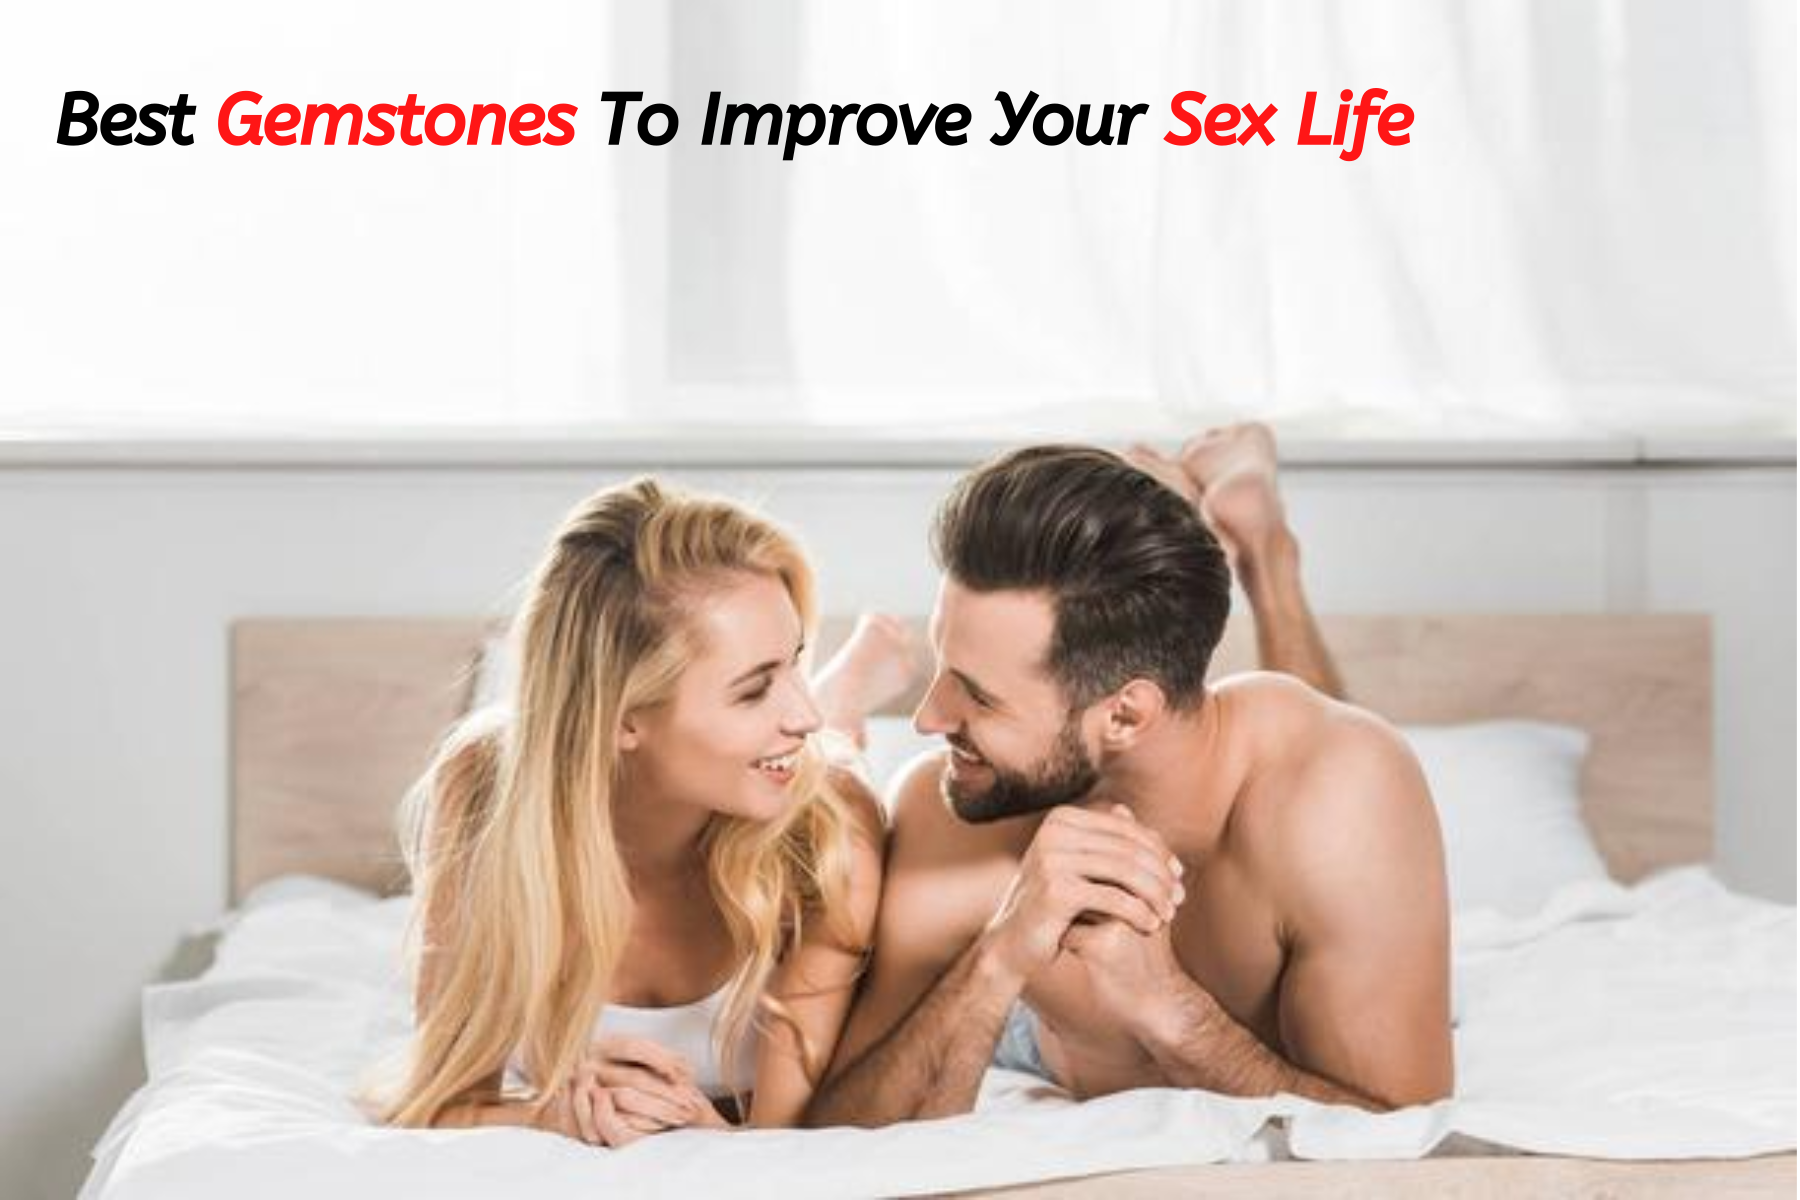 Best Gemstones To Improve Your Sex Life - Increasing Your Sexual Efficiency